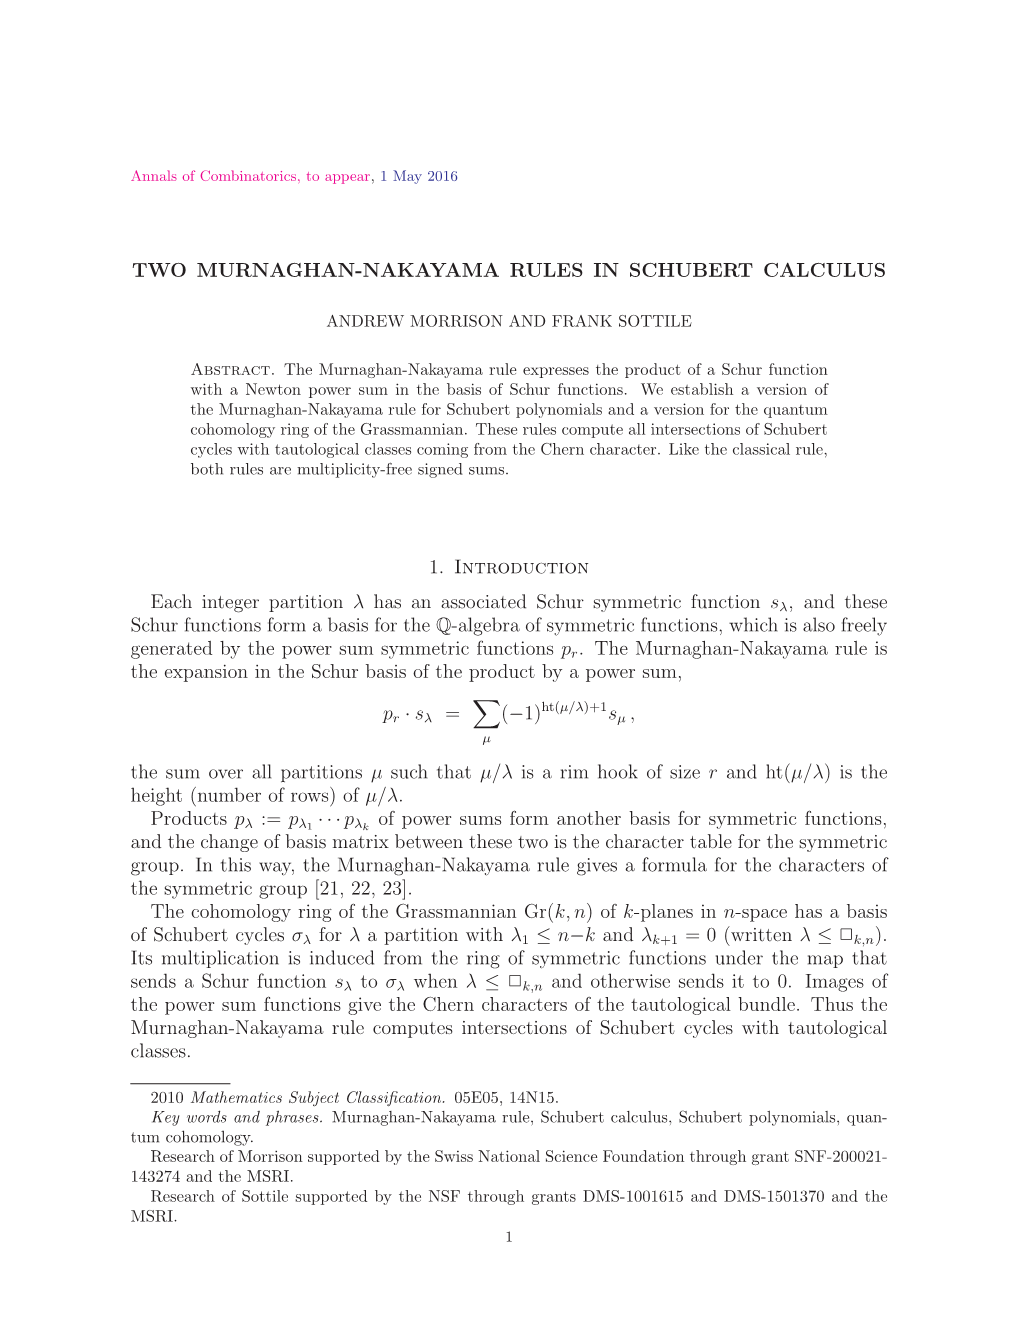 Two Murnaghan-Nakayama Rules in Schubert Calculus